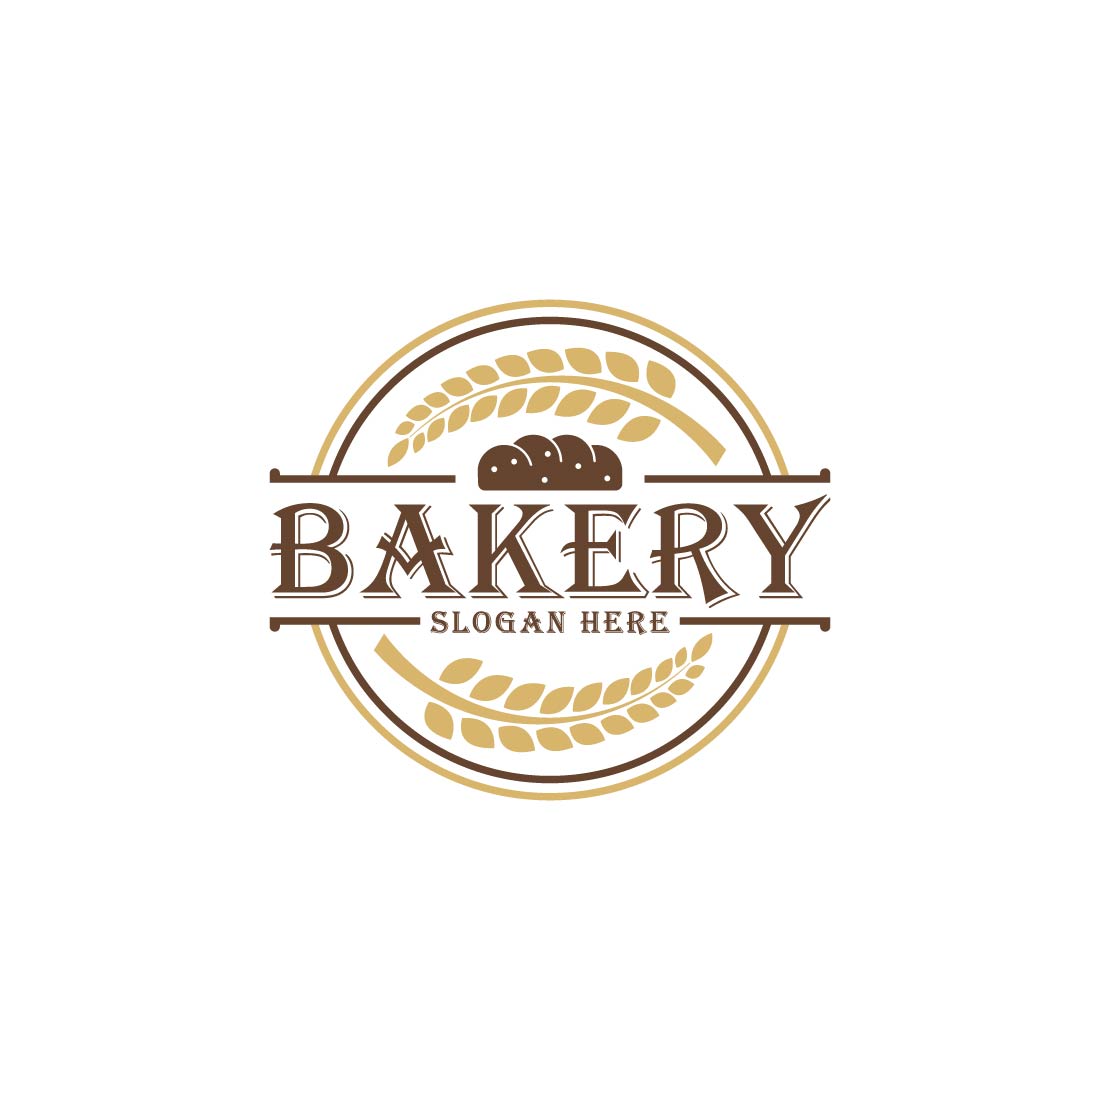 Bakery Logo Design cover image.